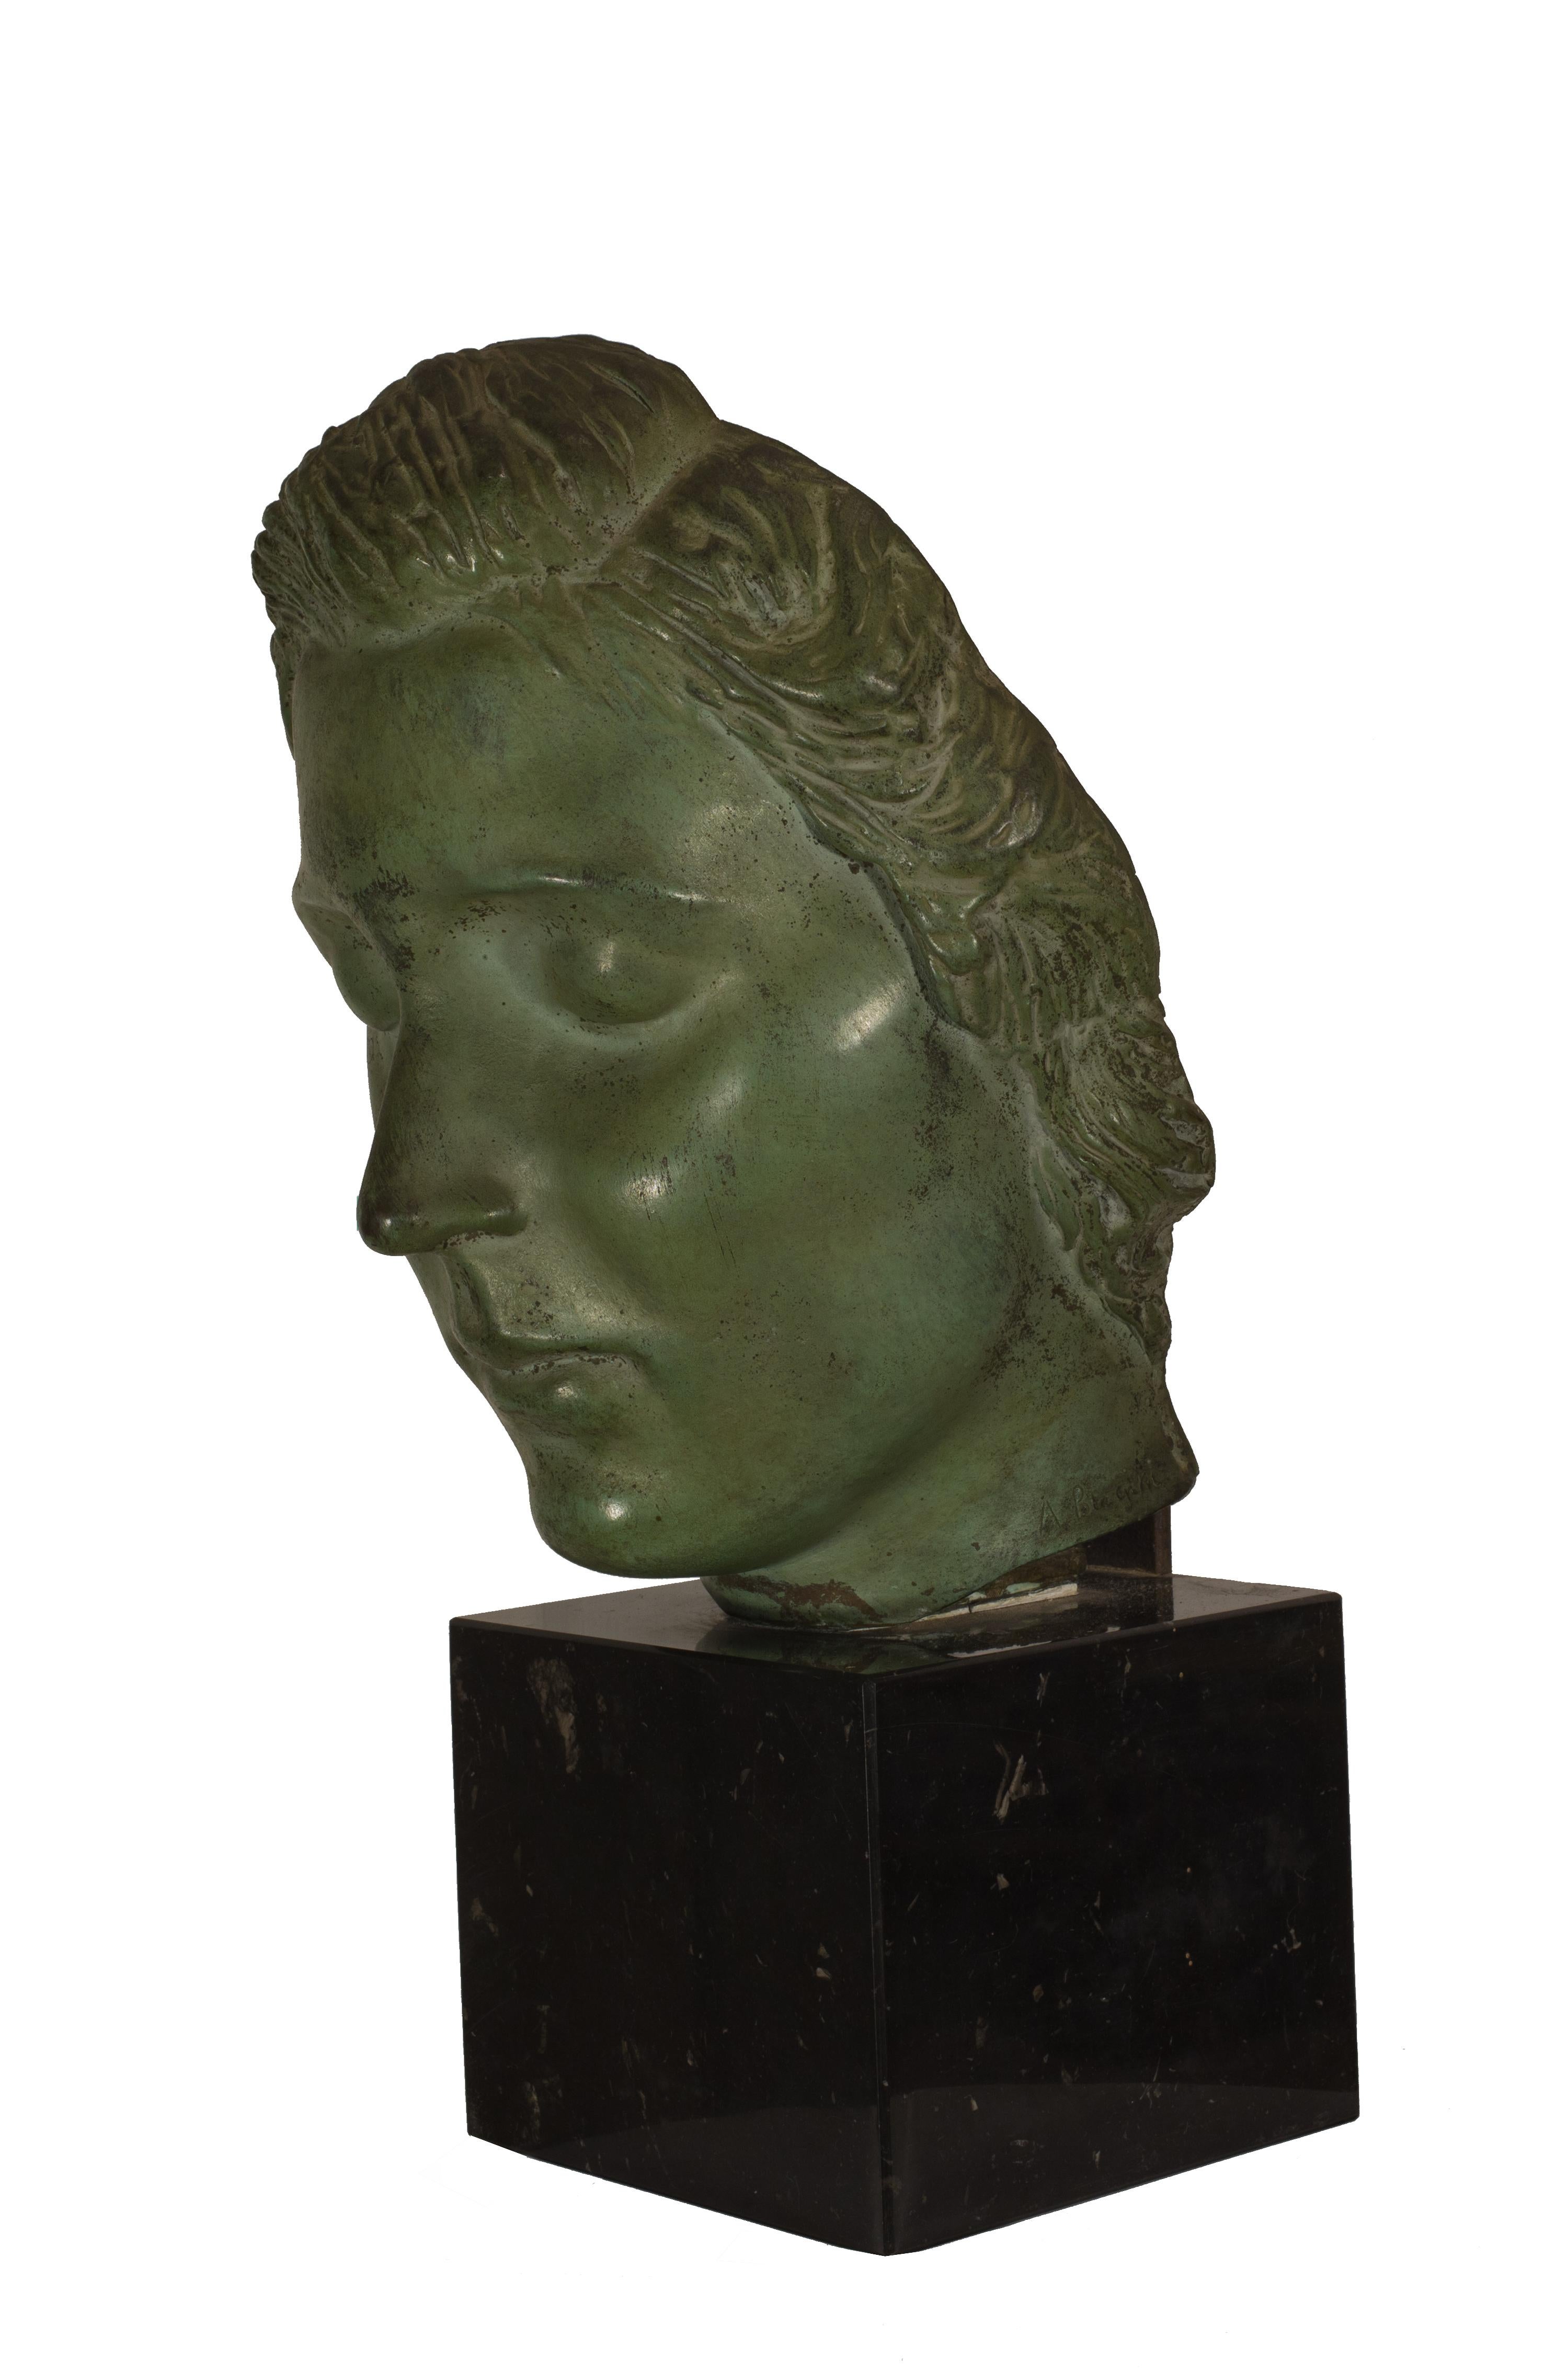 Alfredo Biagini (Rome 1886 - 1952), Visage féminin

Sculpture en bronze, 23 x 17 x 21 cm, signée en bas.